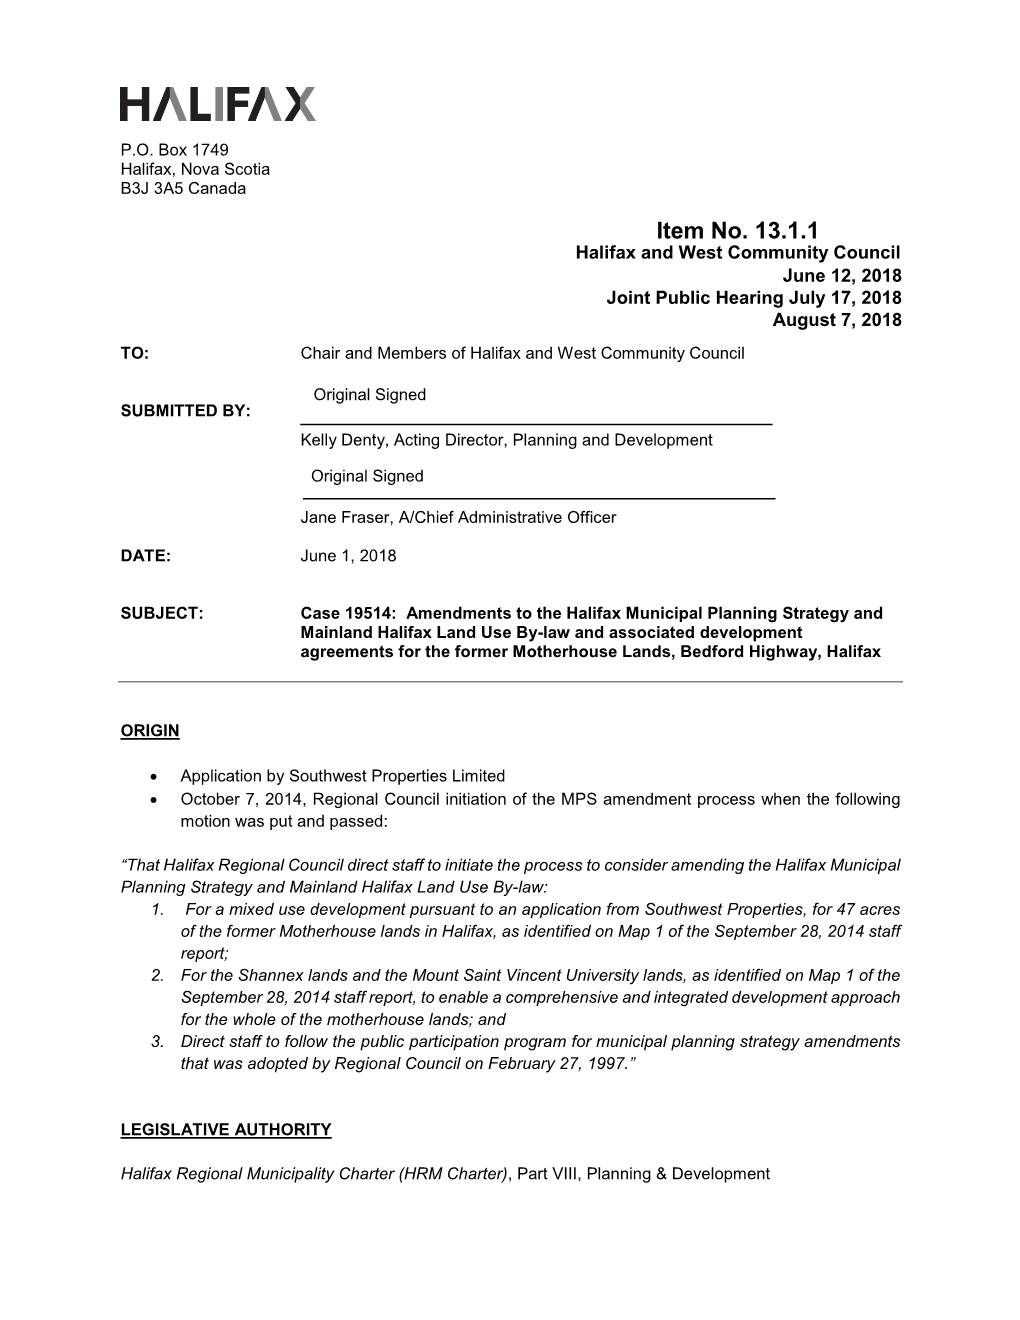 Amendments to the Halifax Municipal Planning Strategy and Mainland